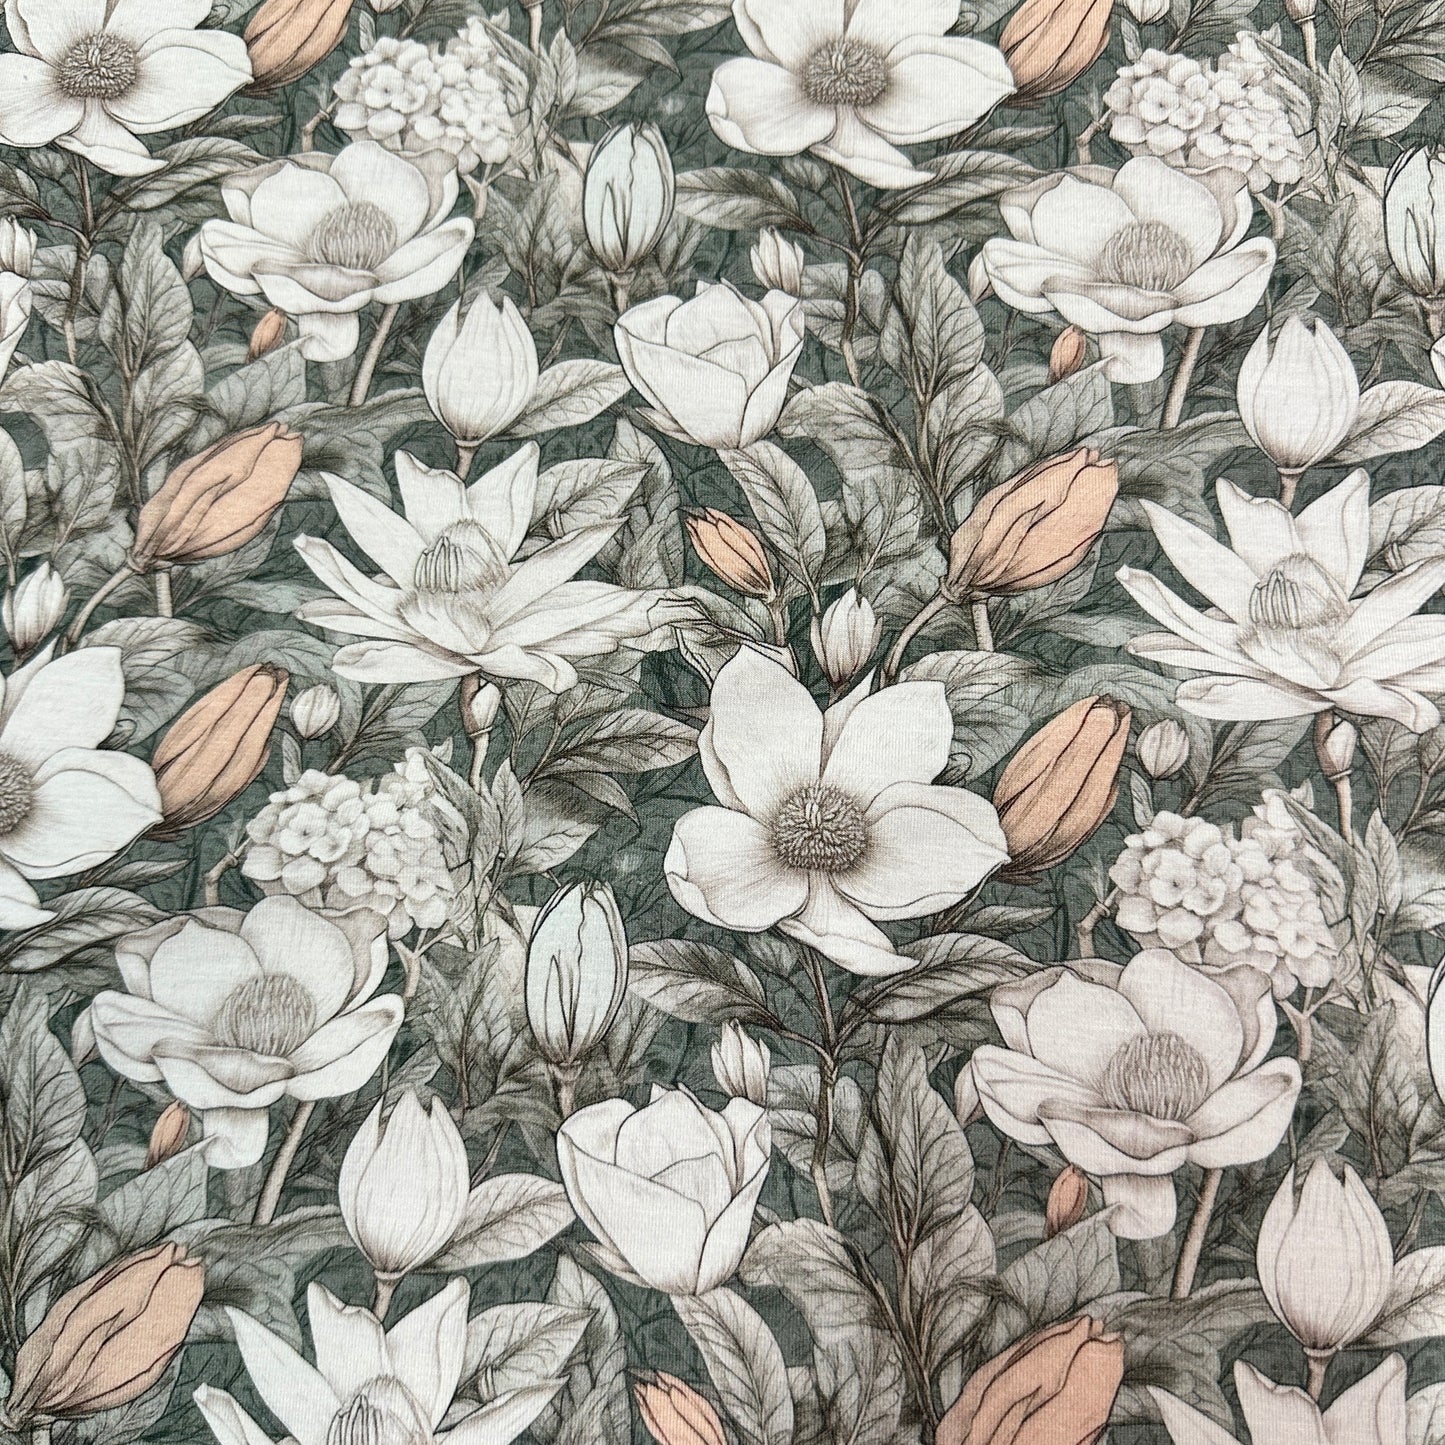 Vintage Botanicals on Bamboo/Spandex Jersey Fabric